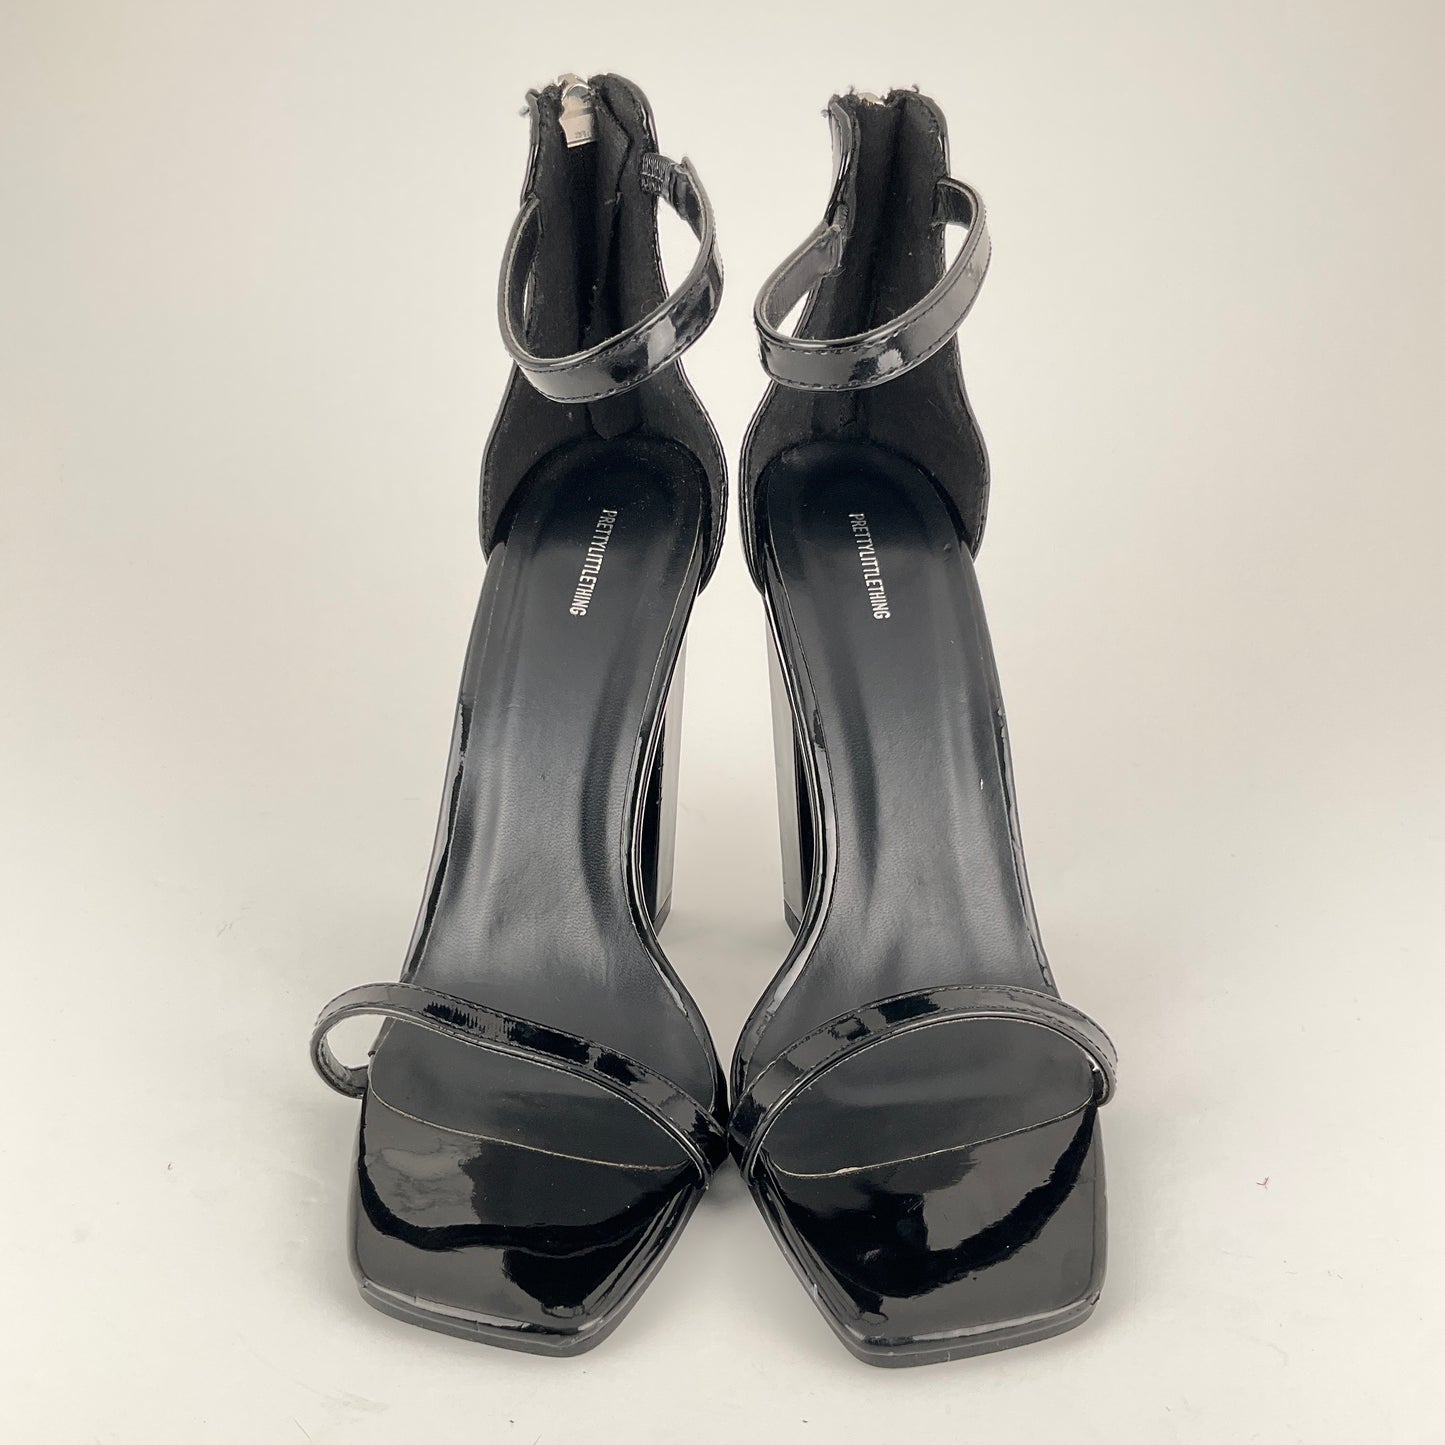 Pretty Little Thing - Black Heels - Size 5